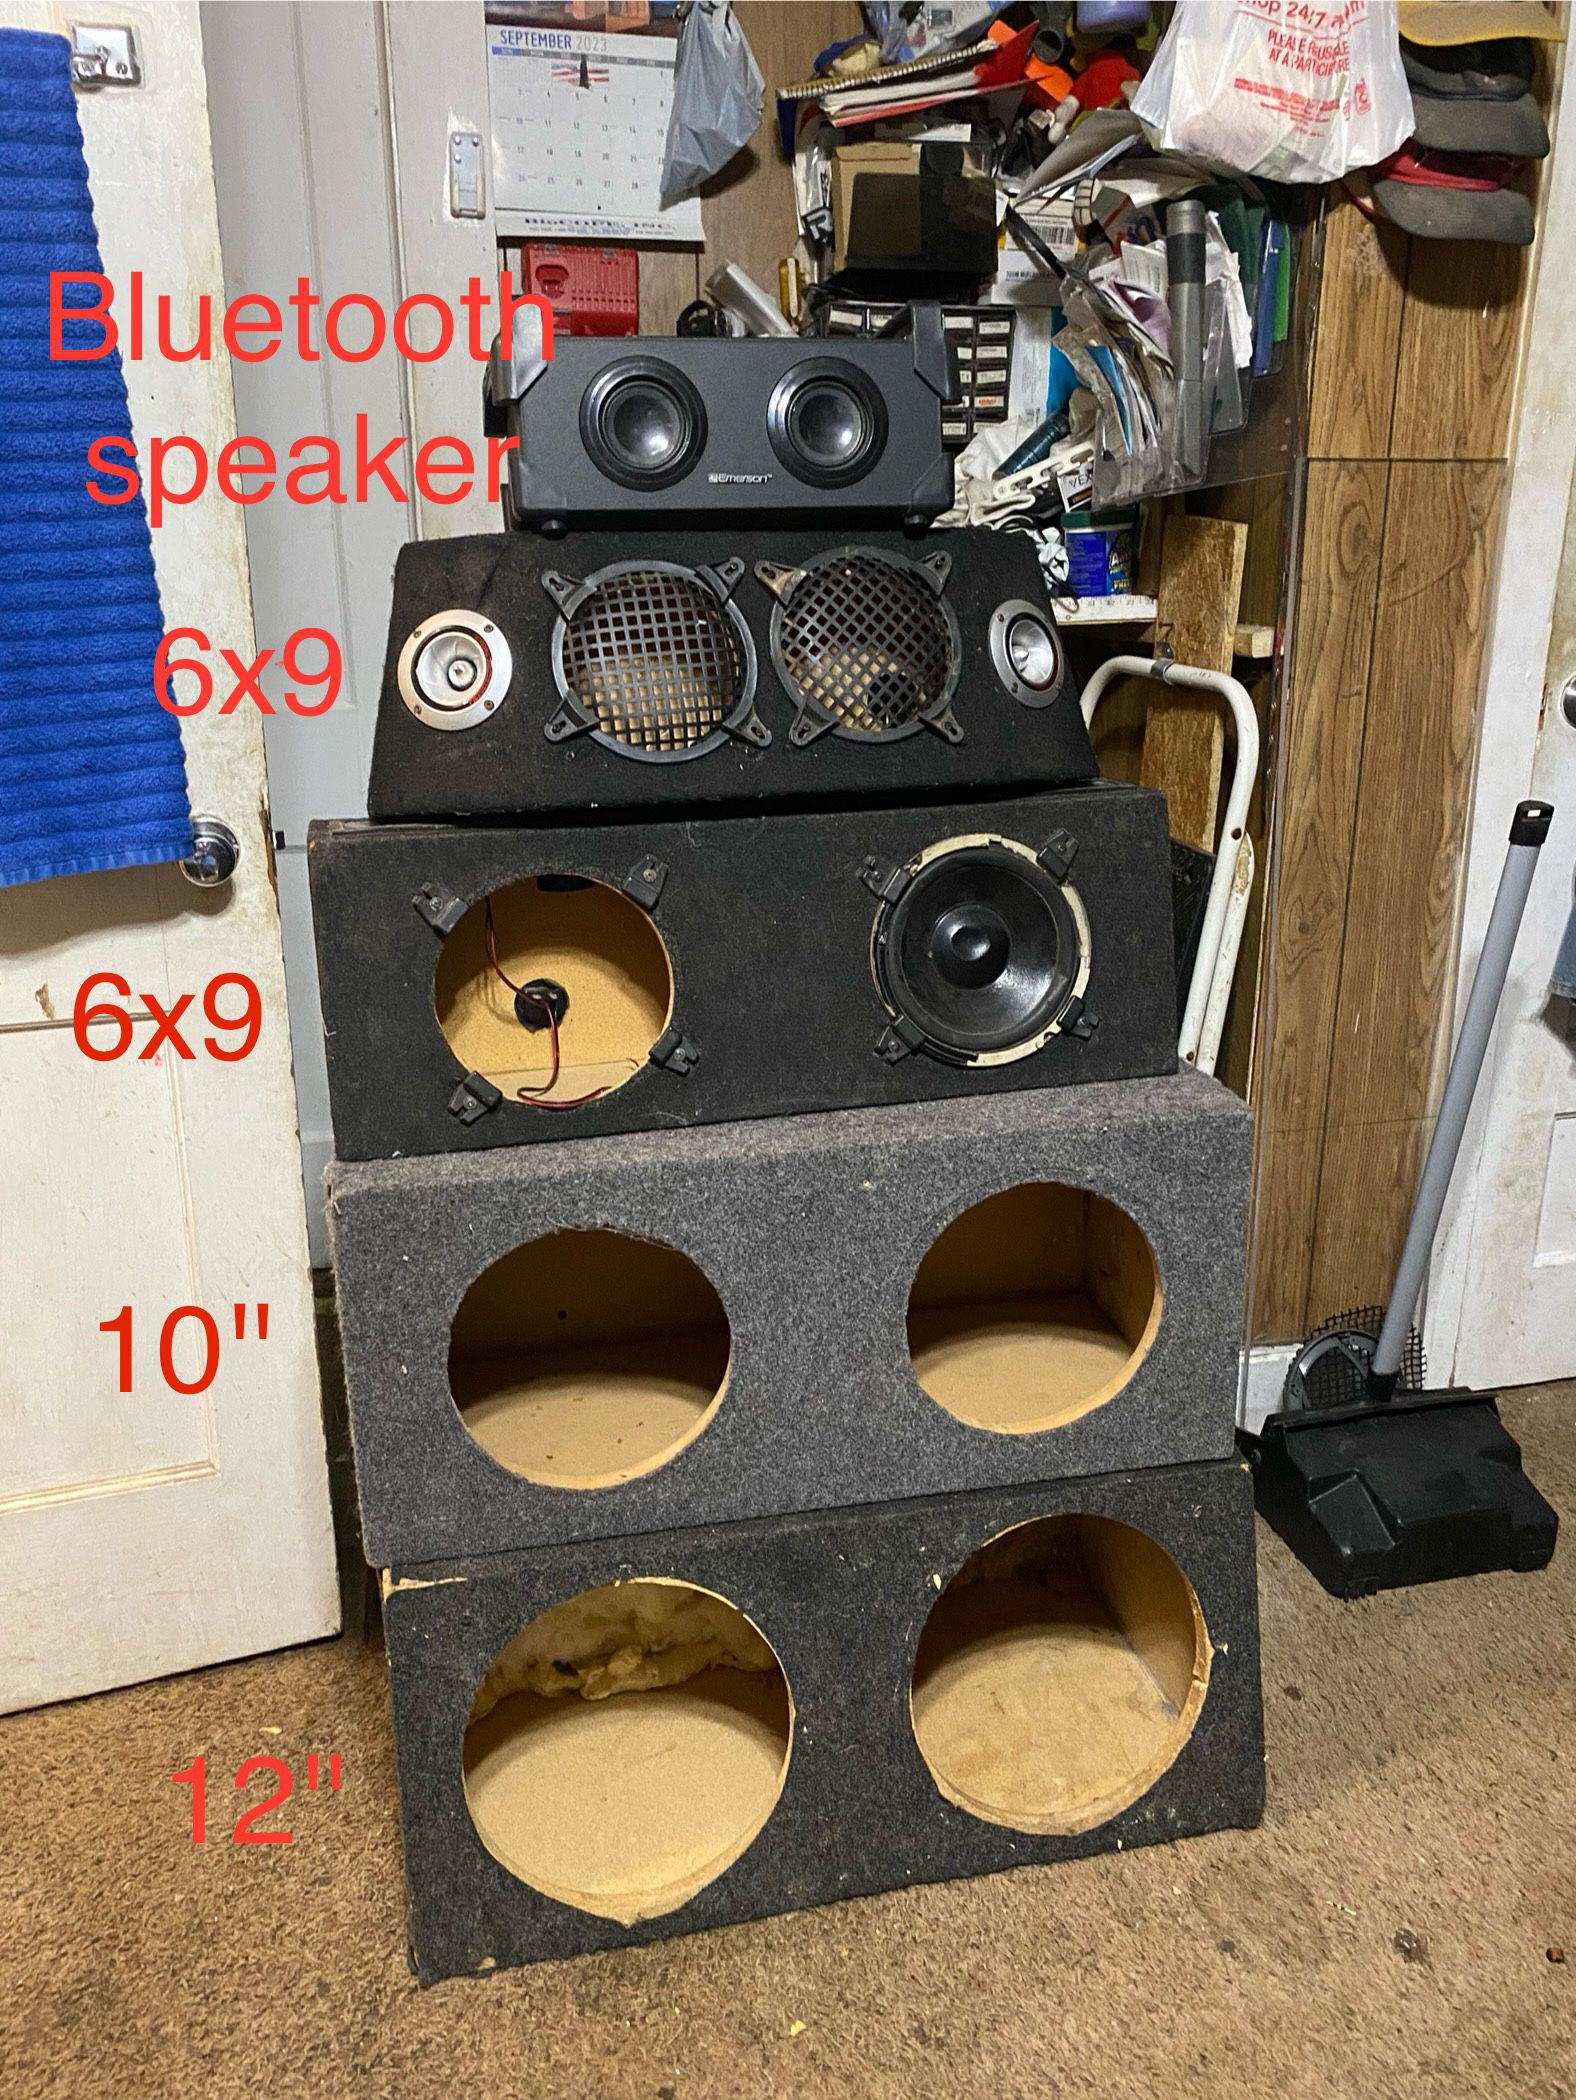 sub's speakers and one Bluetooth speaker 